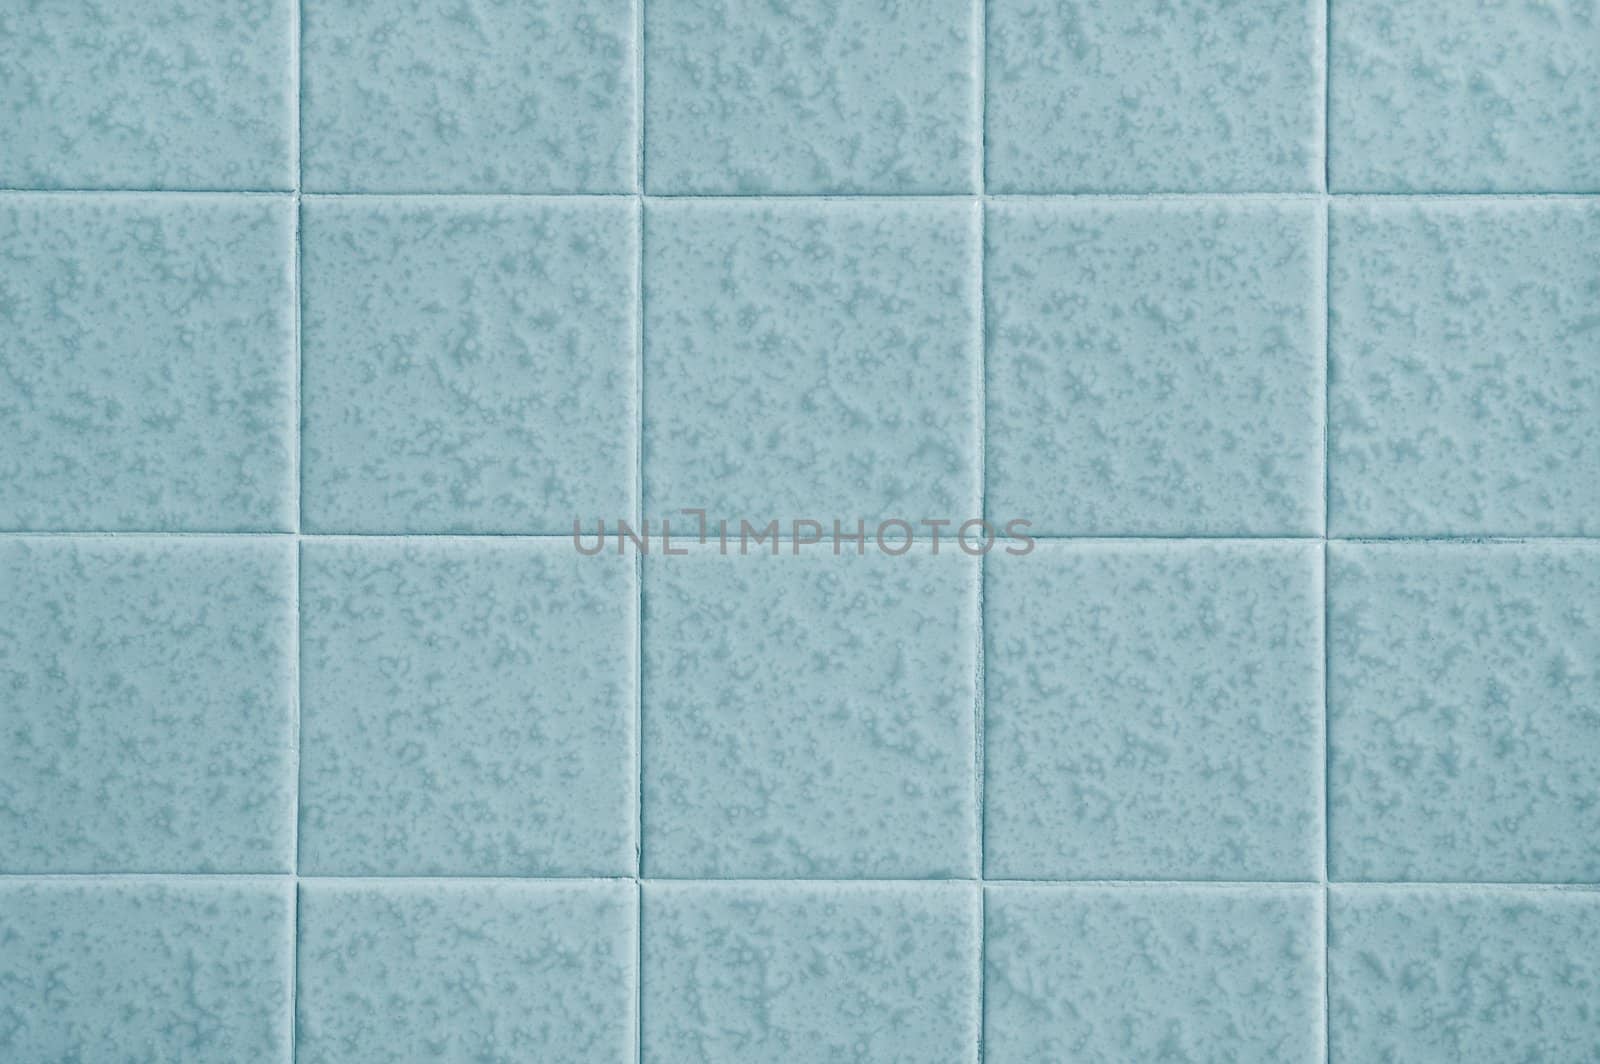 Pattern of blue tiles